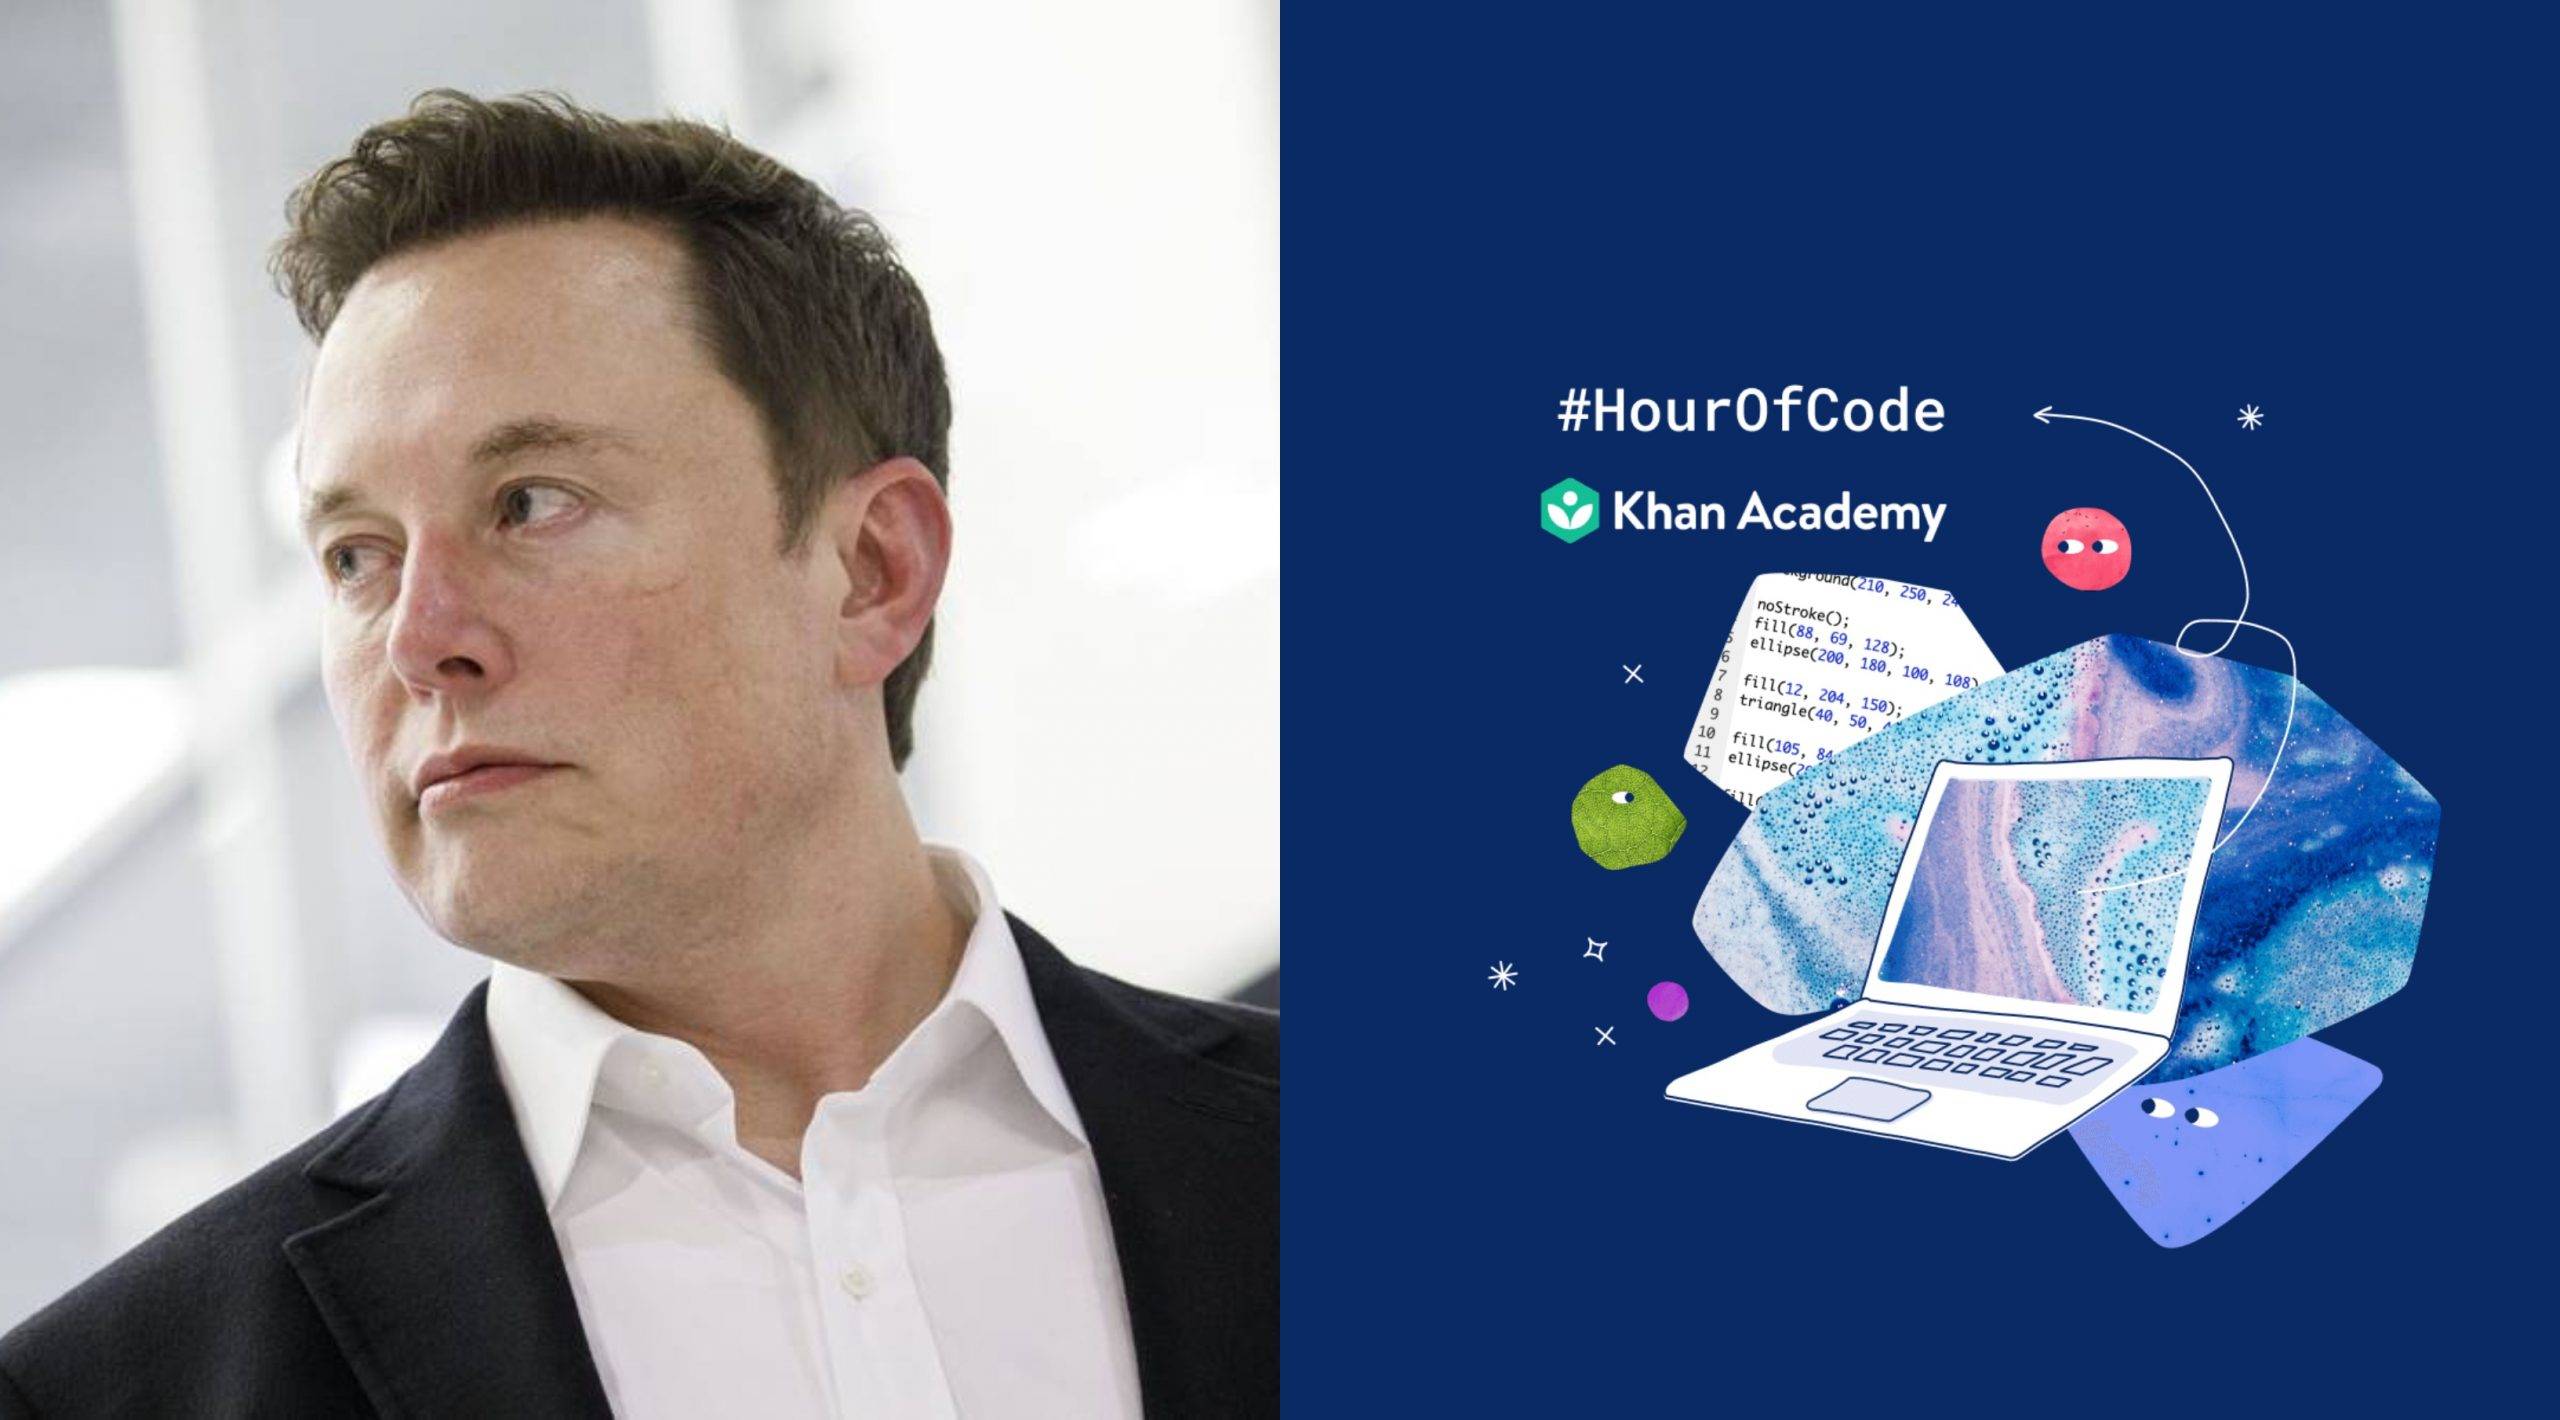 Elon Musk Donates 5 Million to Muslim Run Khan Academy